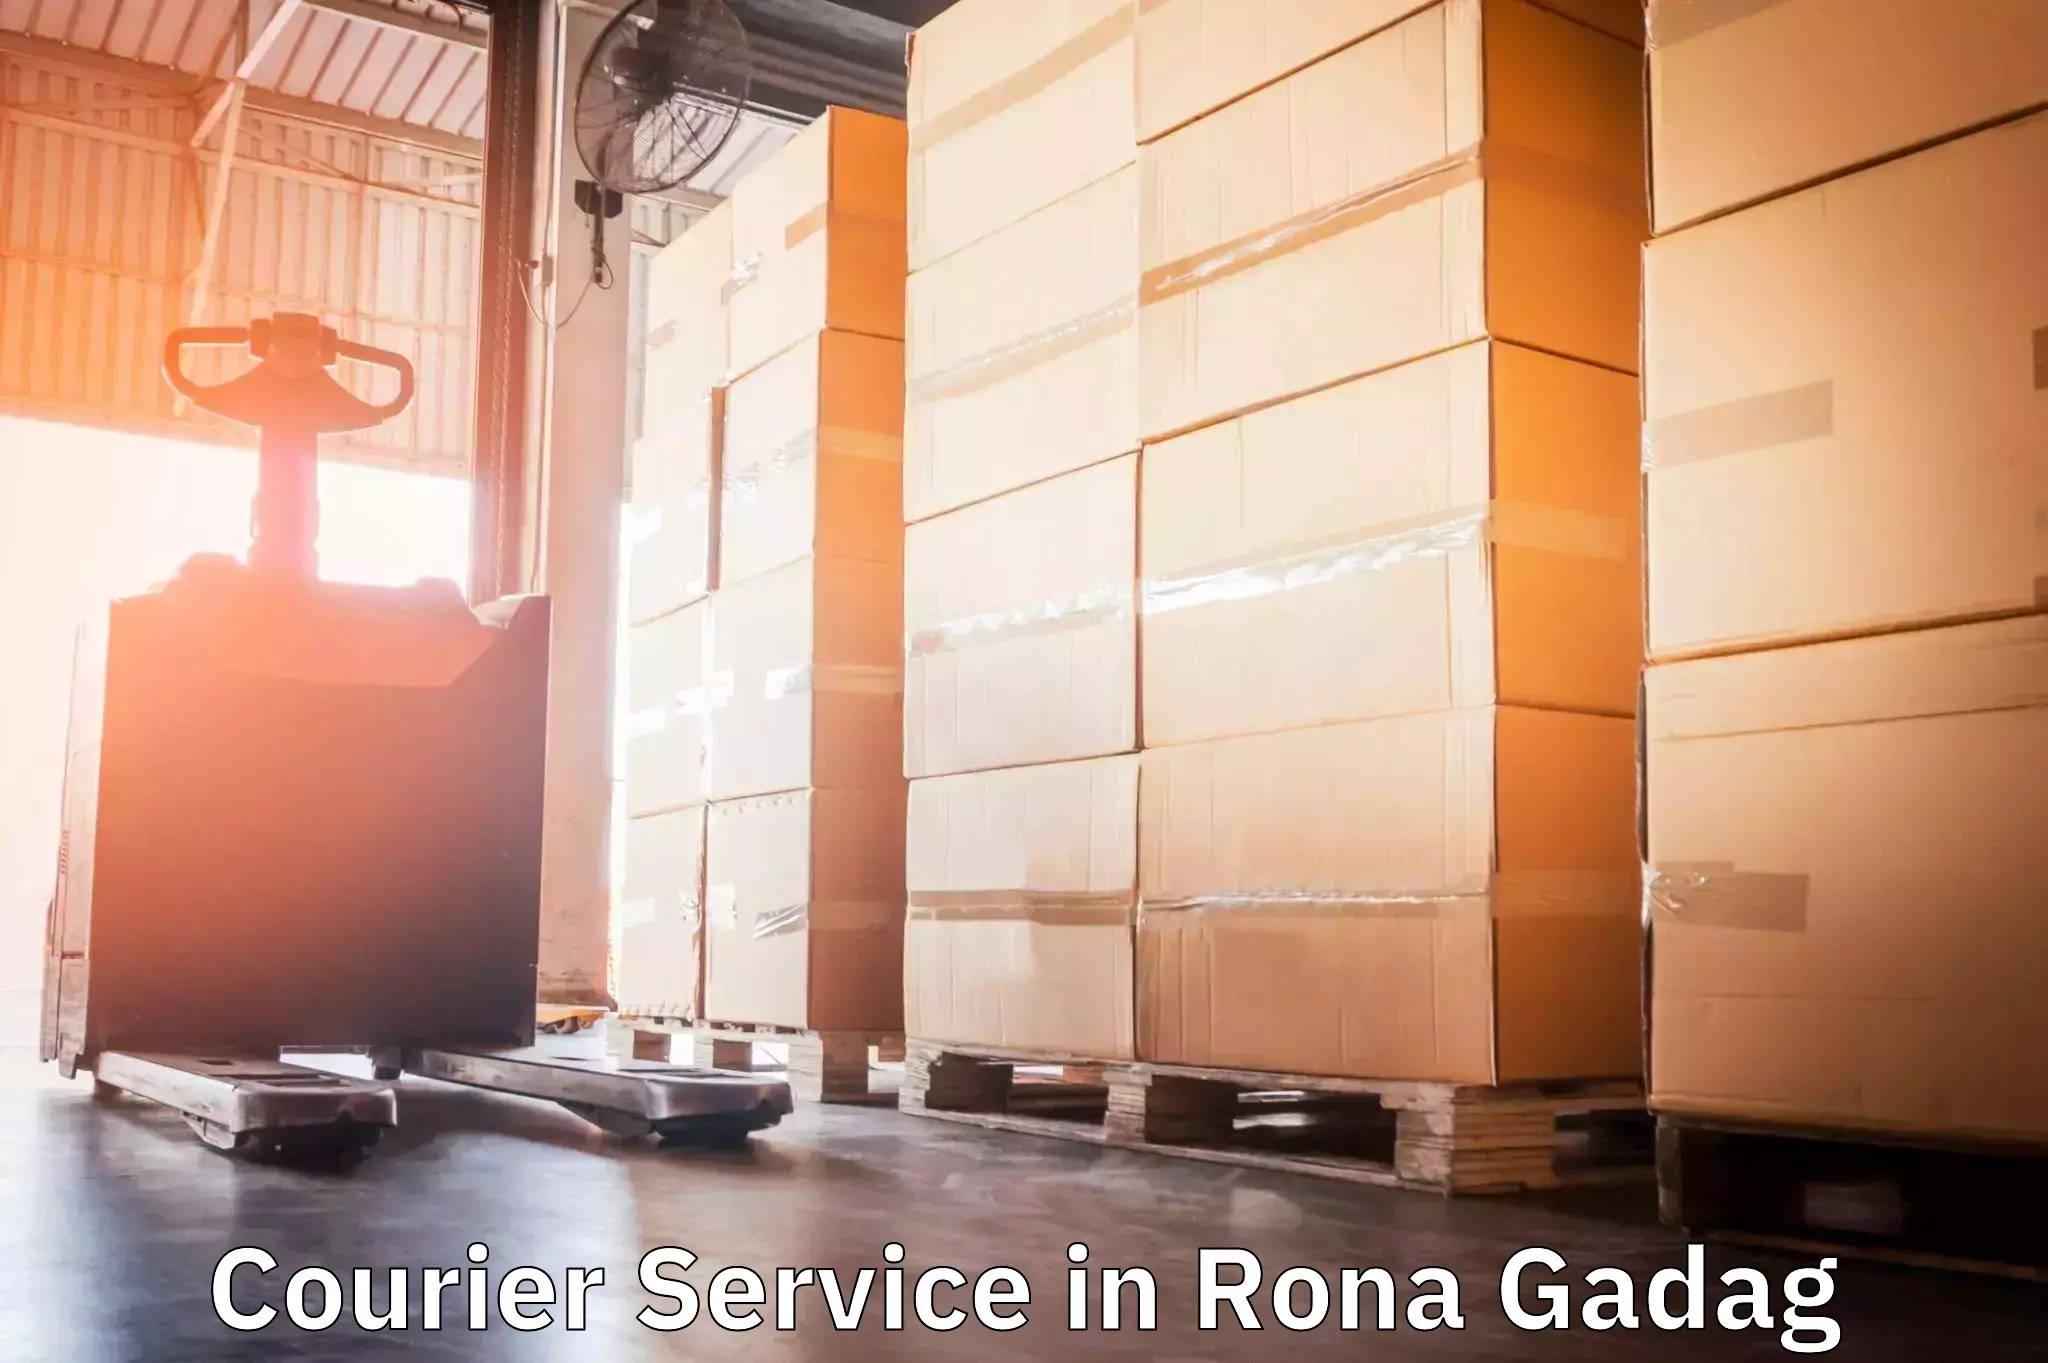 High-performance logistics in Rona Gadag